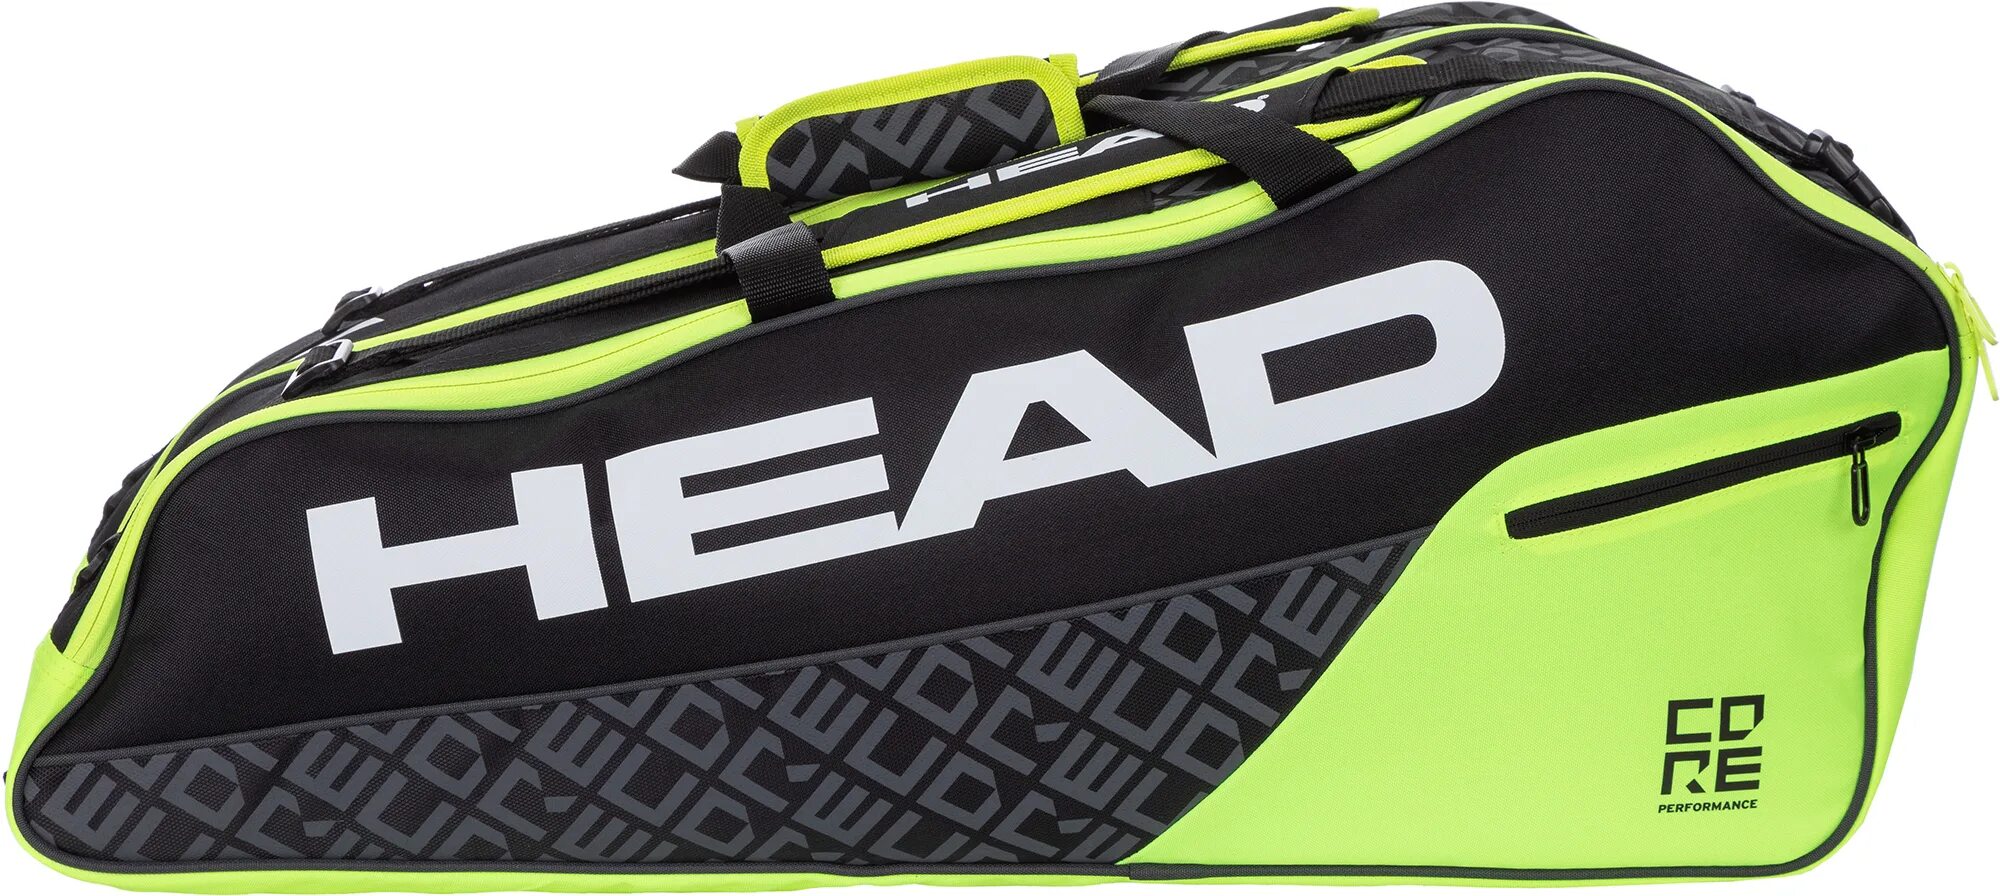 Head add. Сумка для ракеток head Джокович. Head Core 6r Pro. Head Tour Team 6r. Спортивная сумка head.